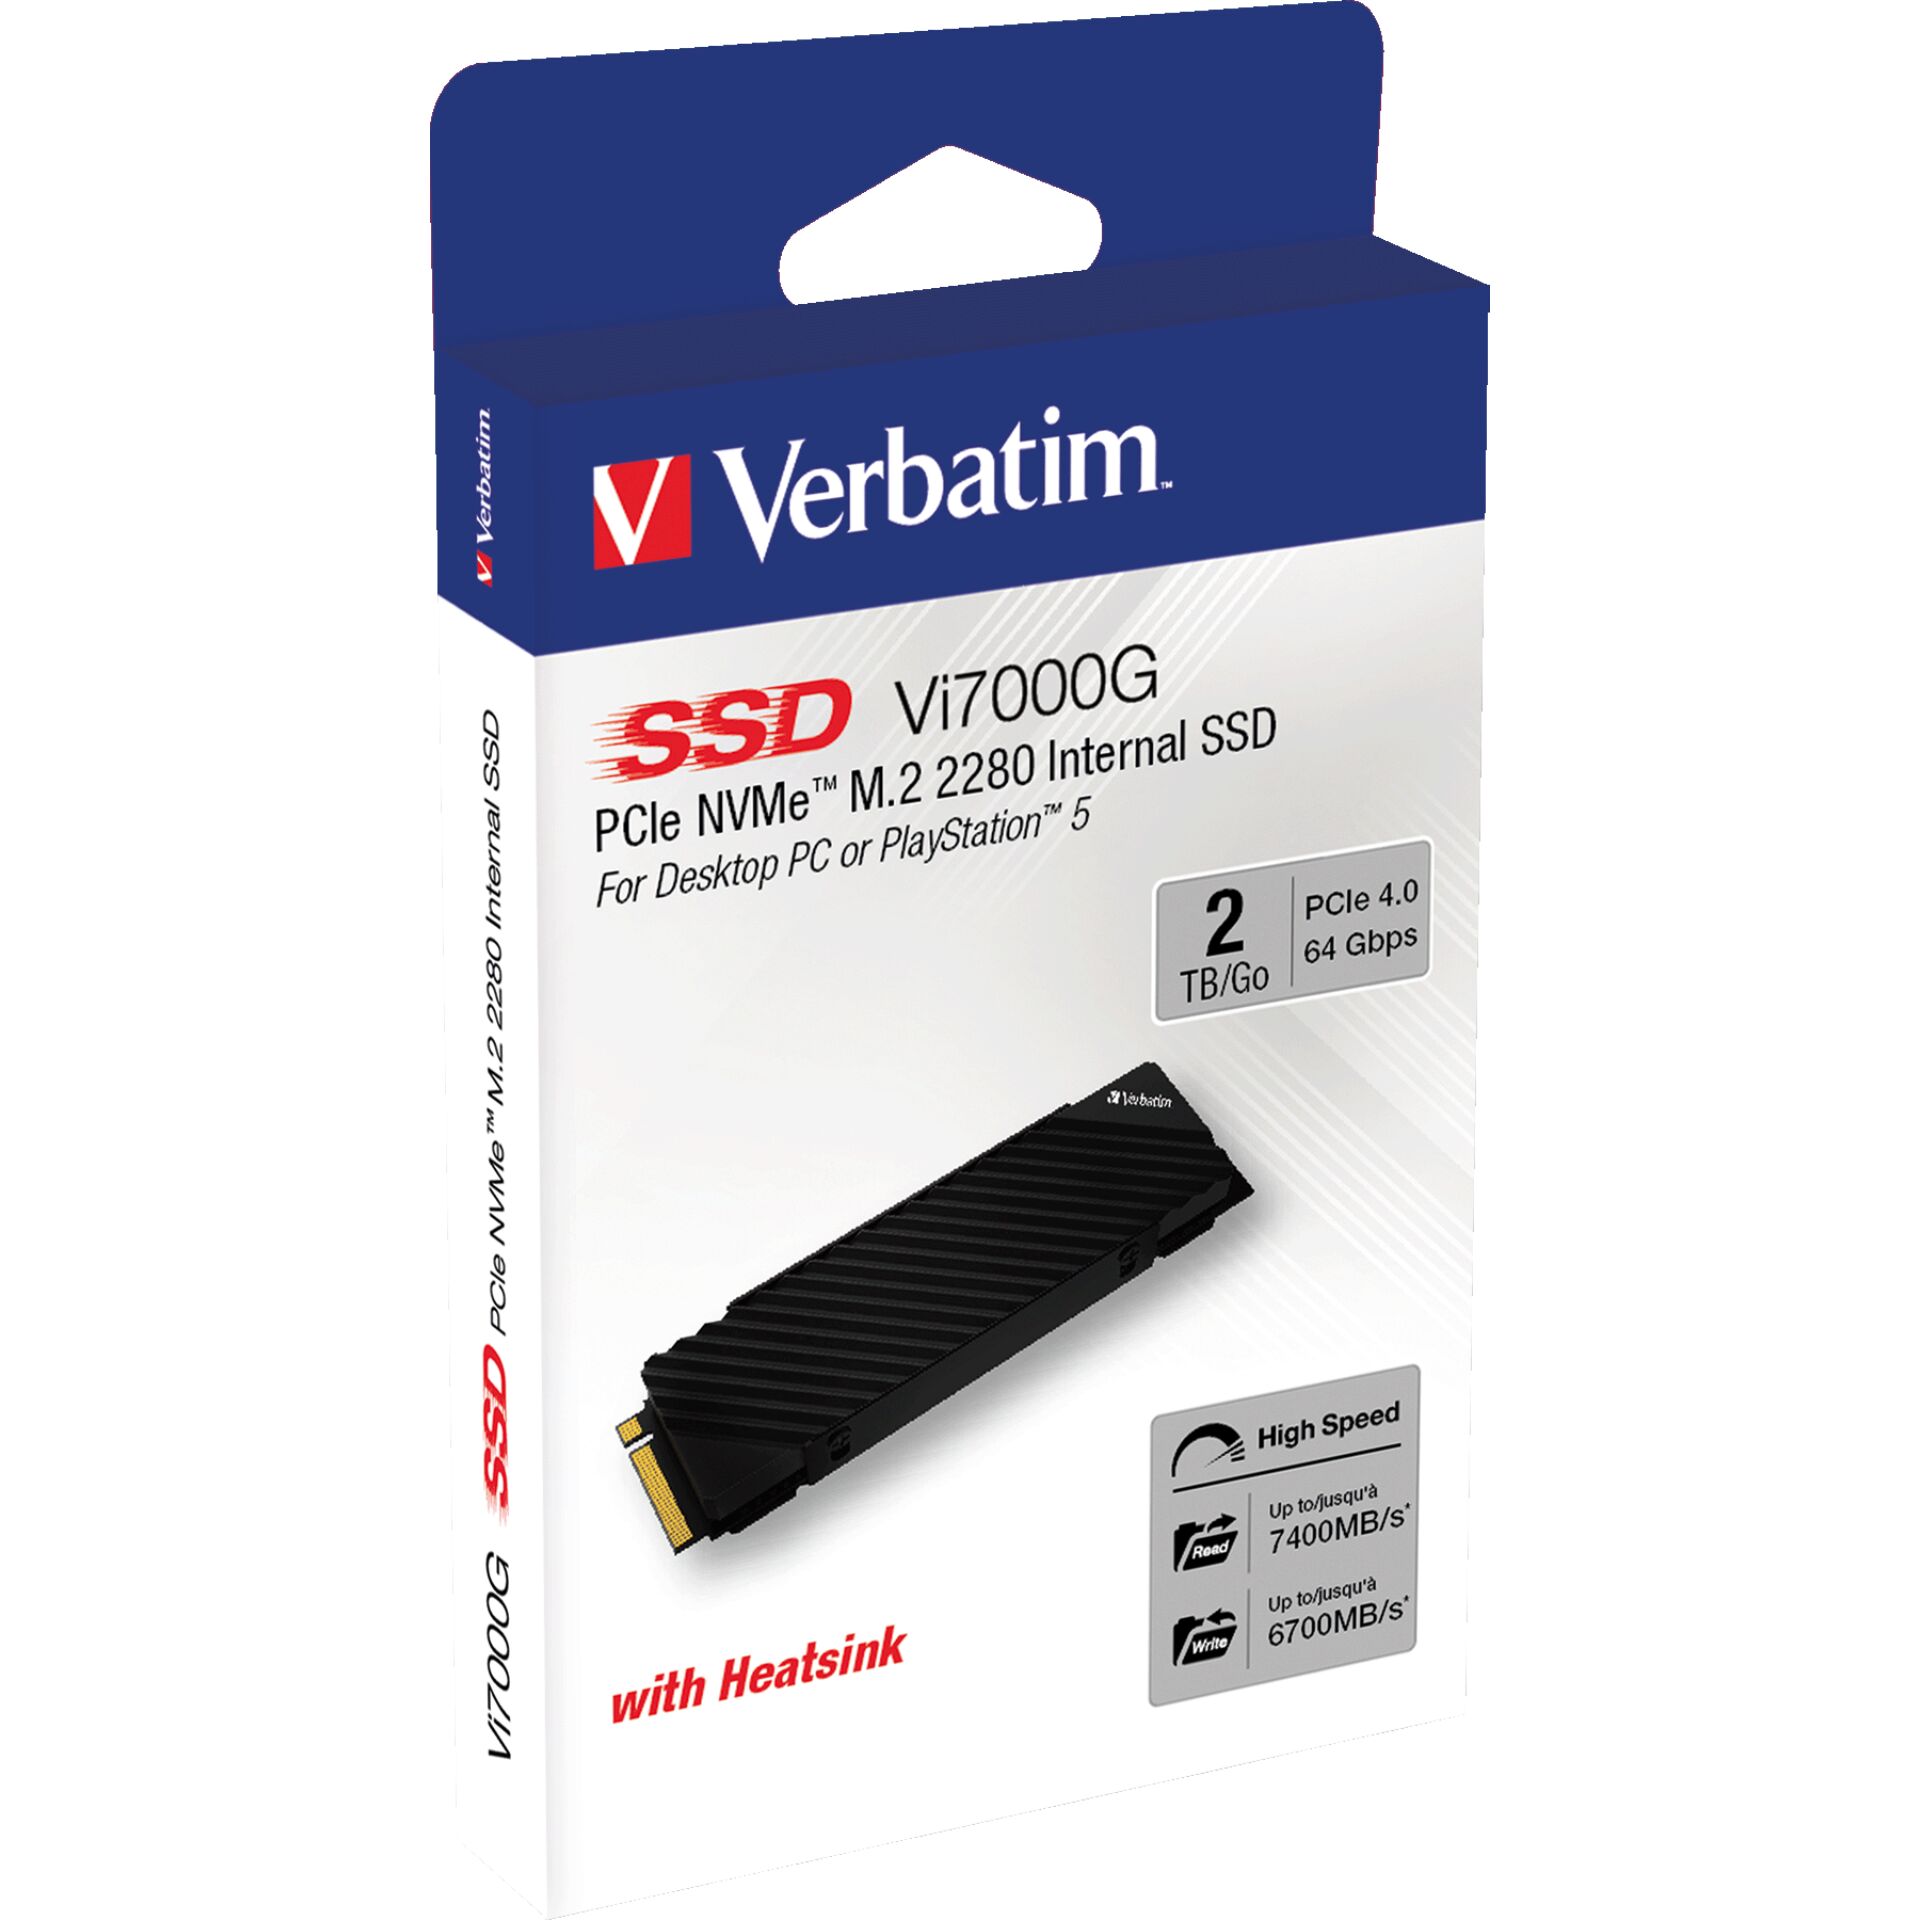 Verbatim Vi7000 PCle NVMe M.2 SSD 2TB                    493